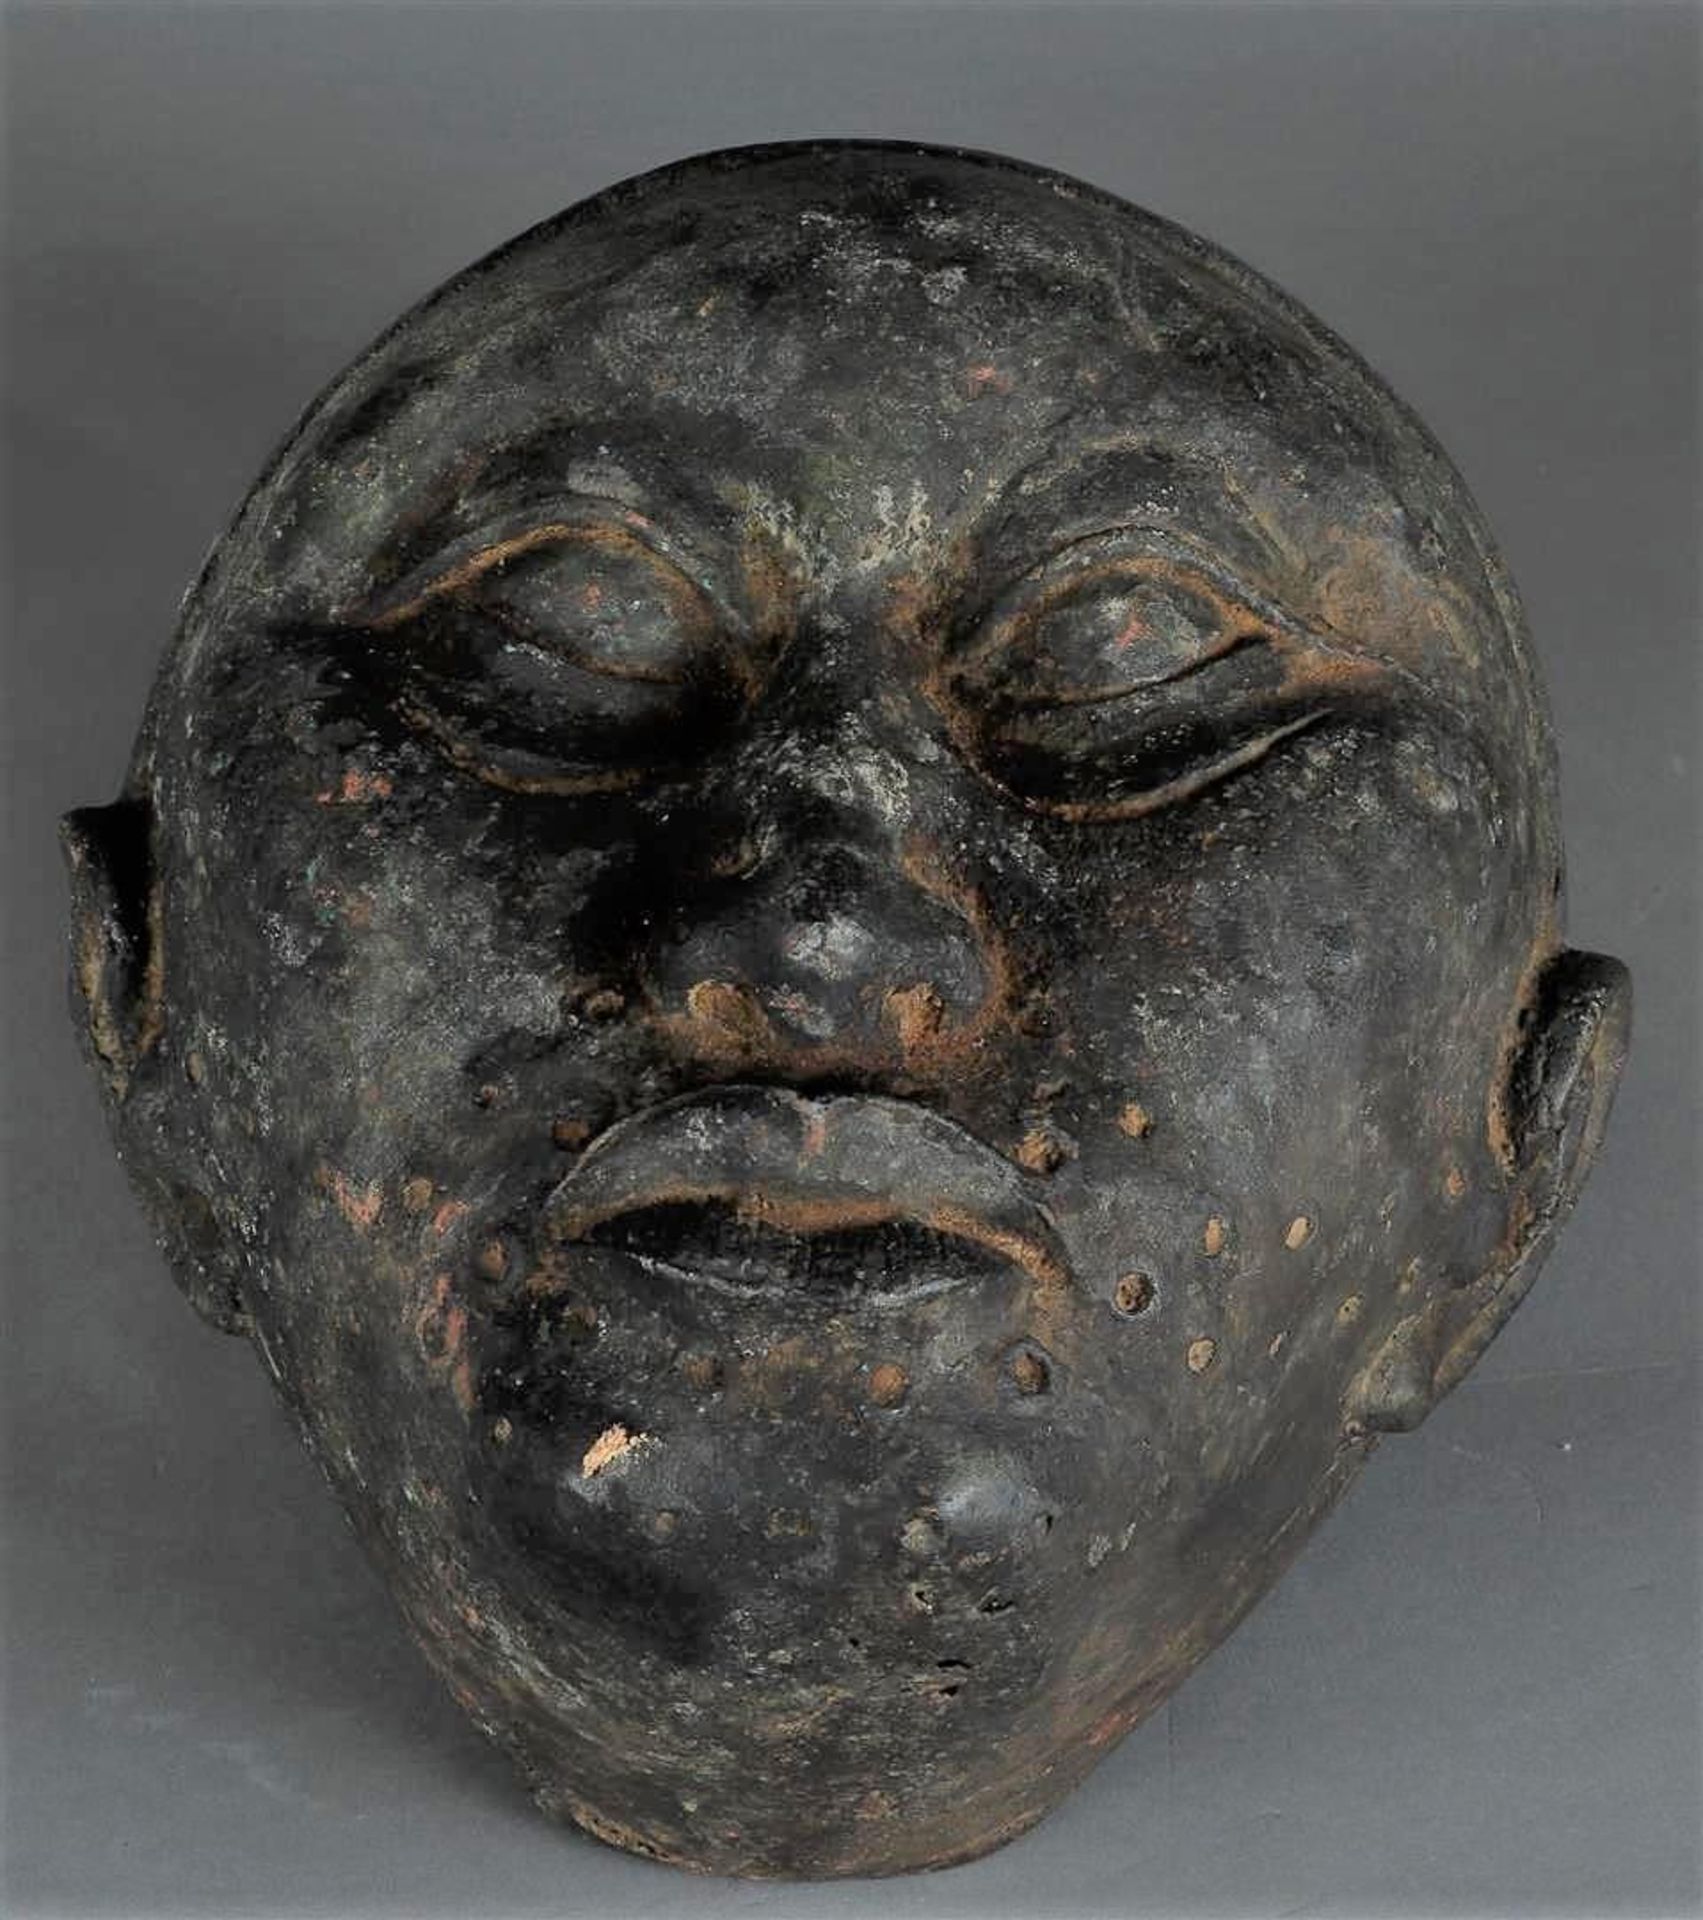 Life size king mask in bronze - IFE - Nigeria, Benin City region, Africa.